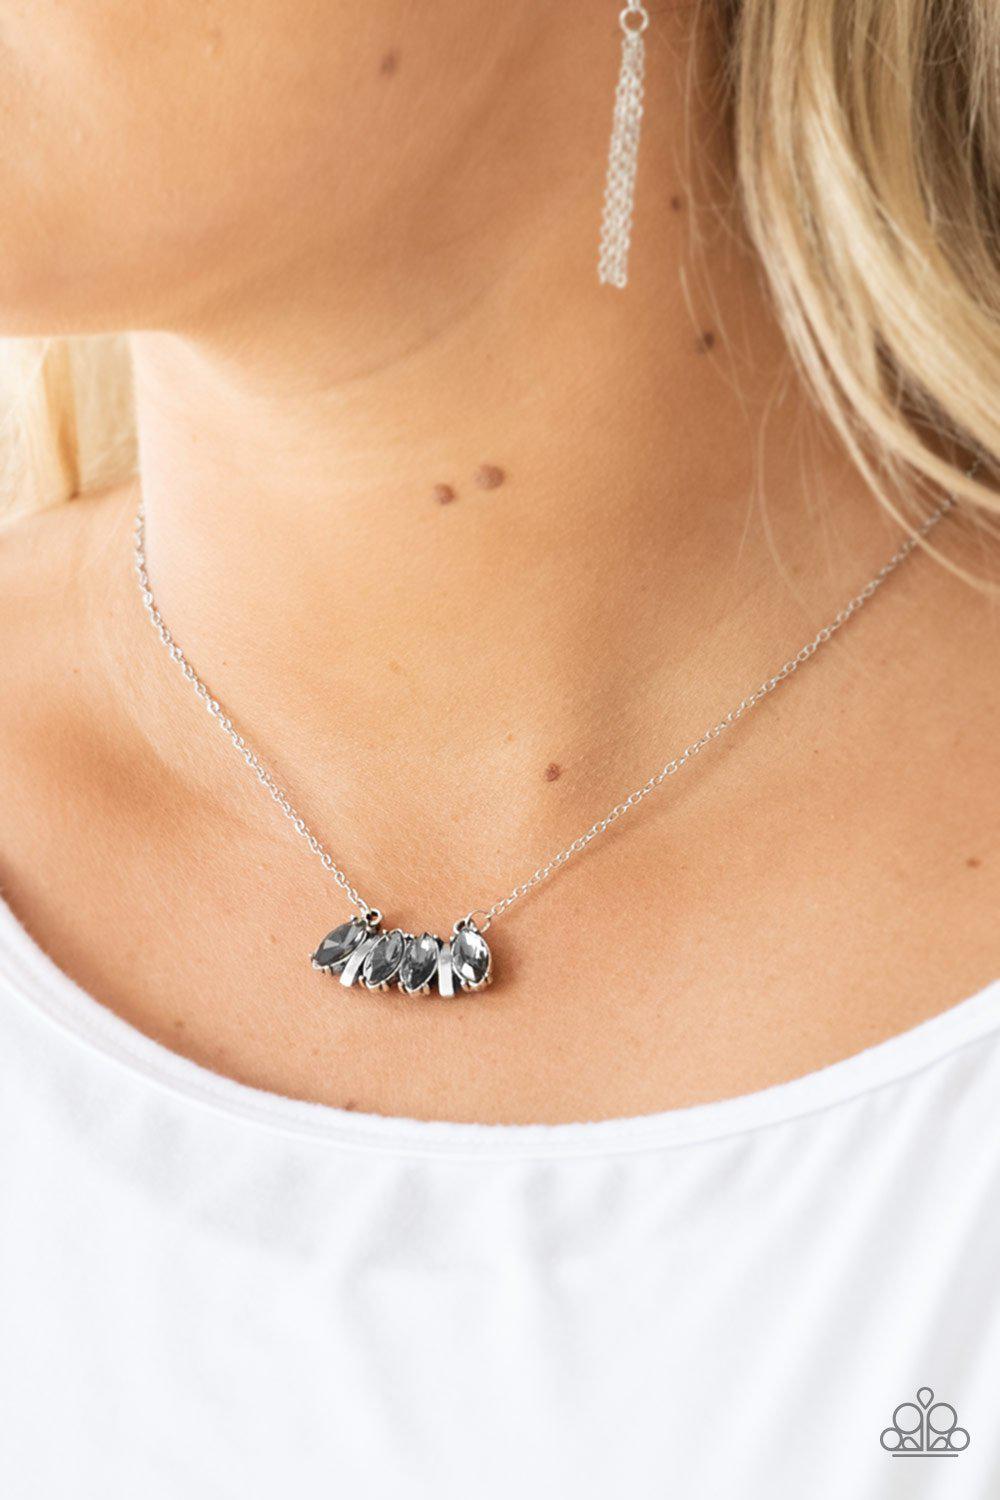 Deco Decadence Silver Smoky Gem Necklace - Paparazzi Accessories-CarasShop.com - $5 Jewelry by Cara Jewels